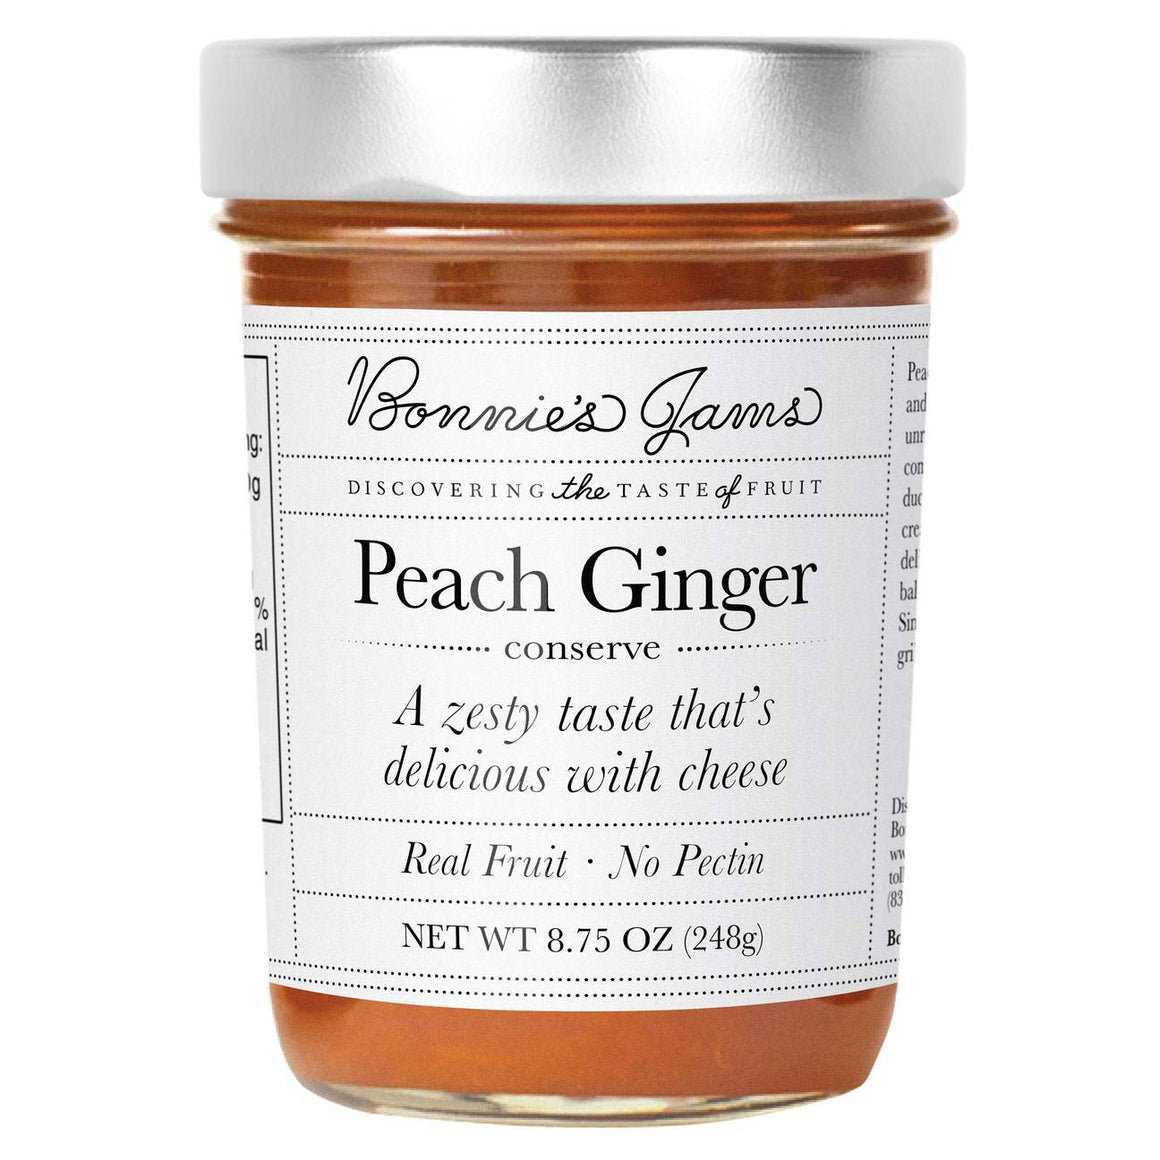 Gourmet Foods International Food Bonnie's Peach Ginger Jam